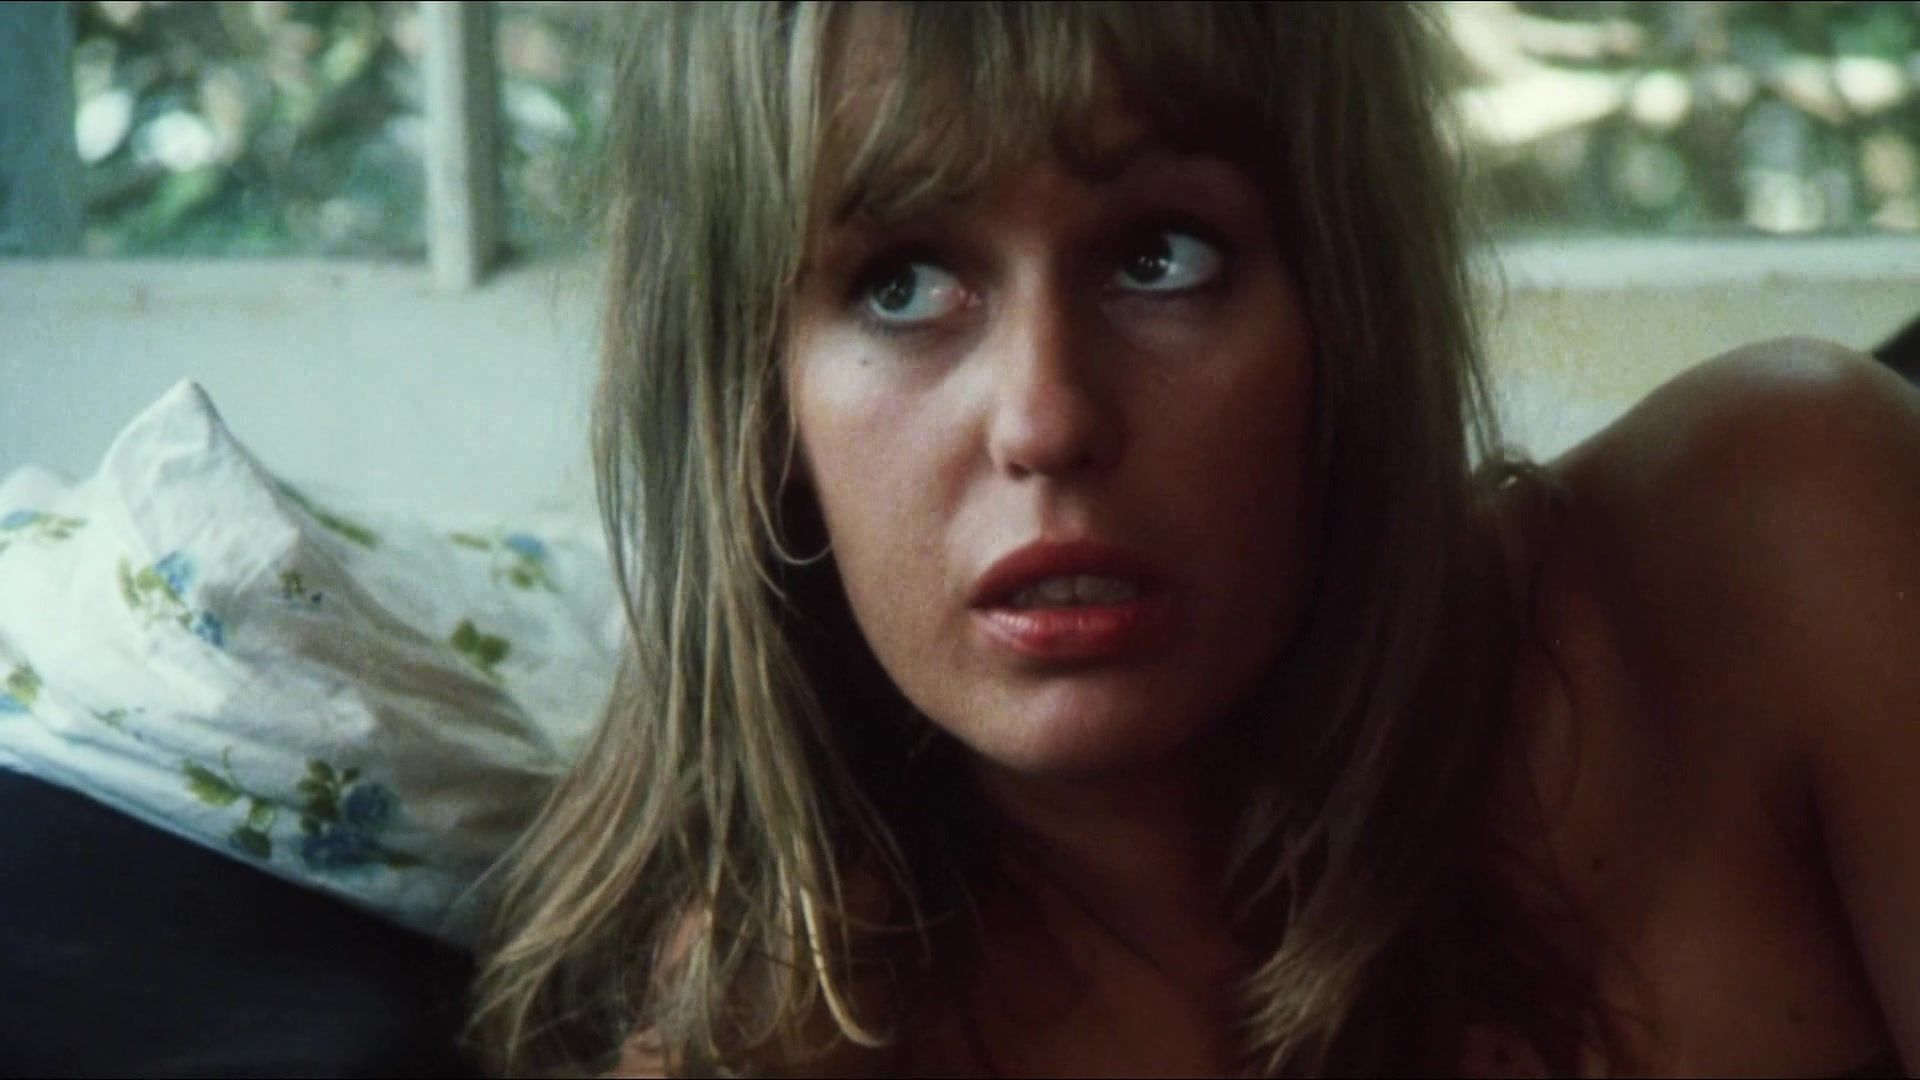 HottyStop Classic Erotic Film "Stone" (1974) Livecams